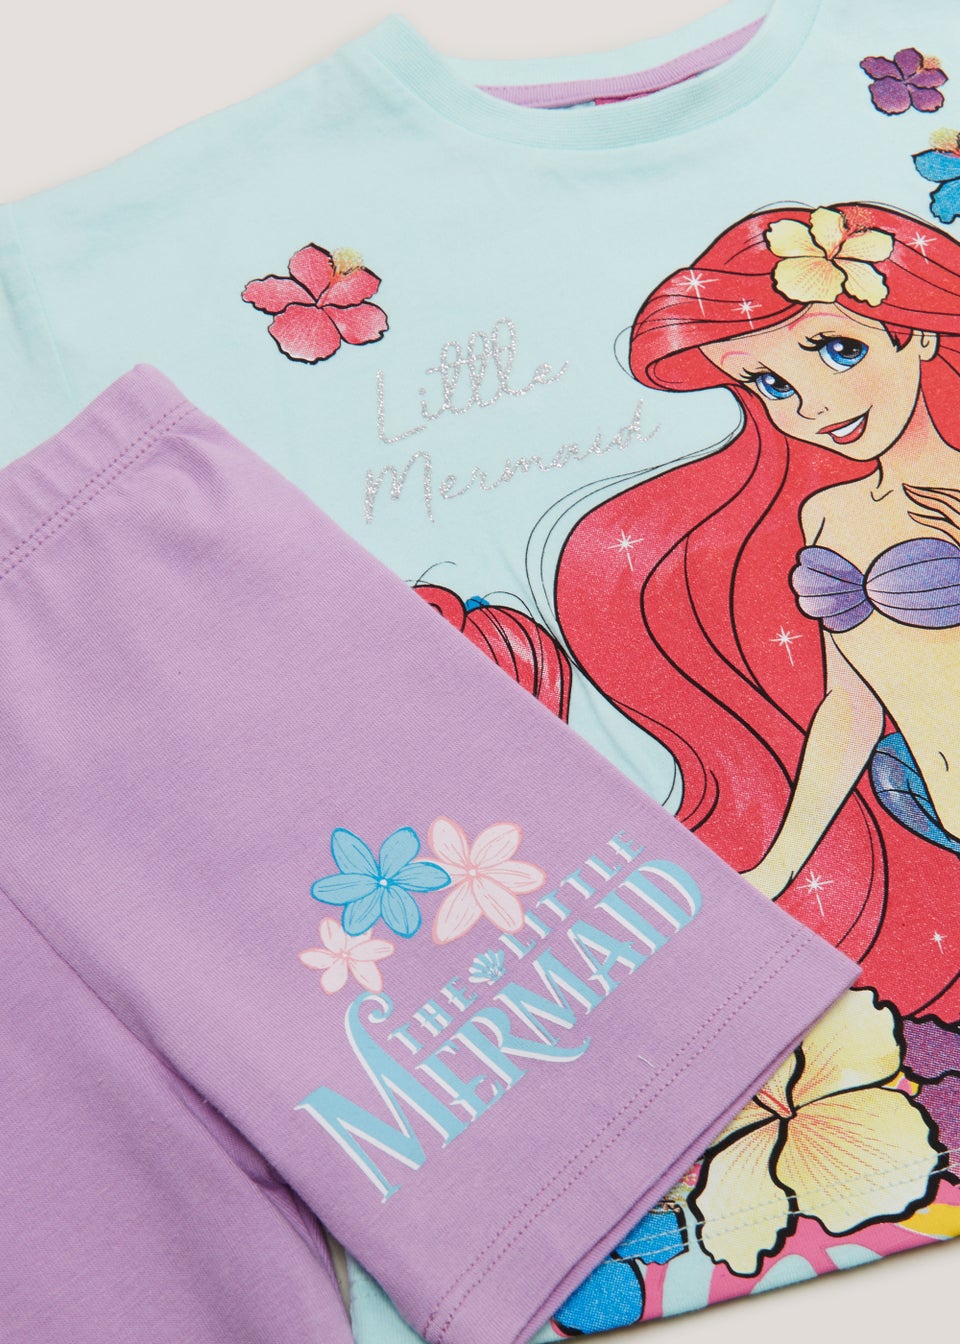 Kids Aqua Disney The Little Mermaid T-Shirt & Shorts Set (9mths-6yrs)